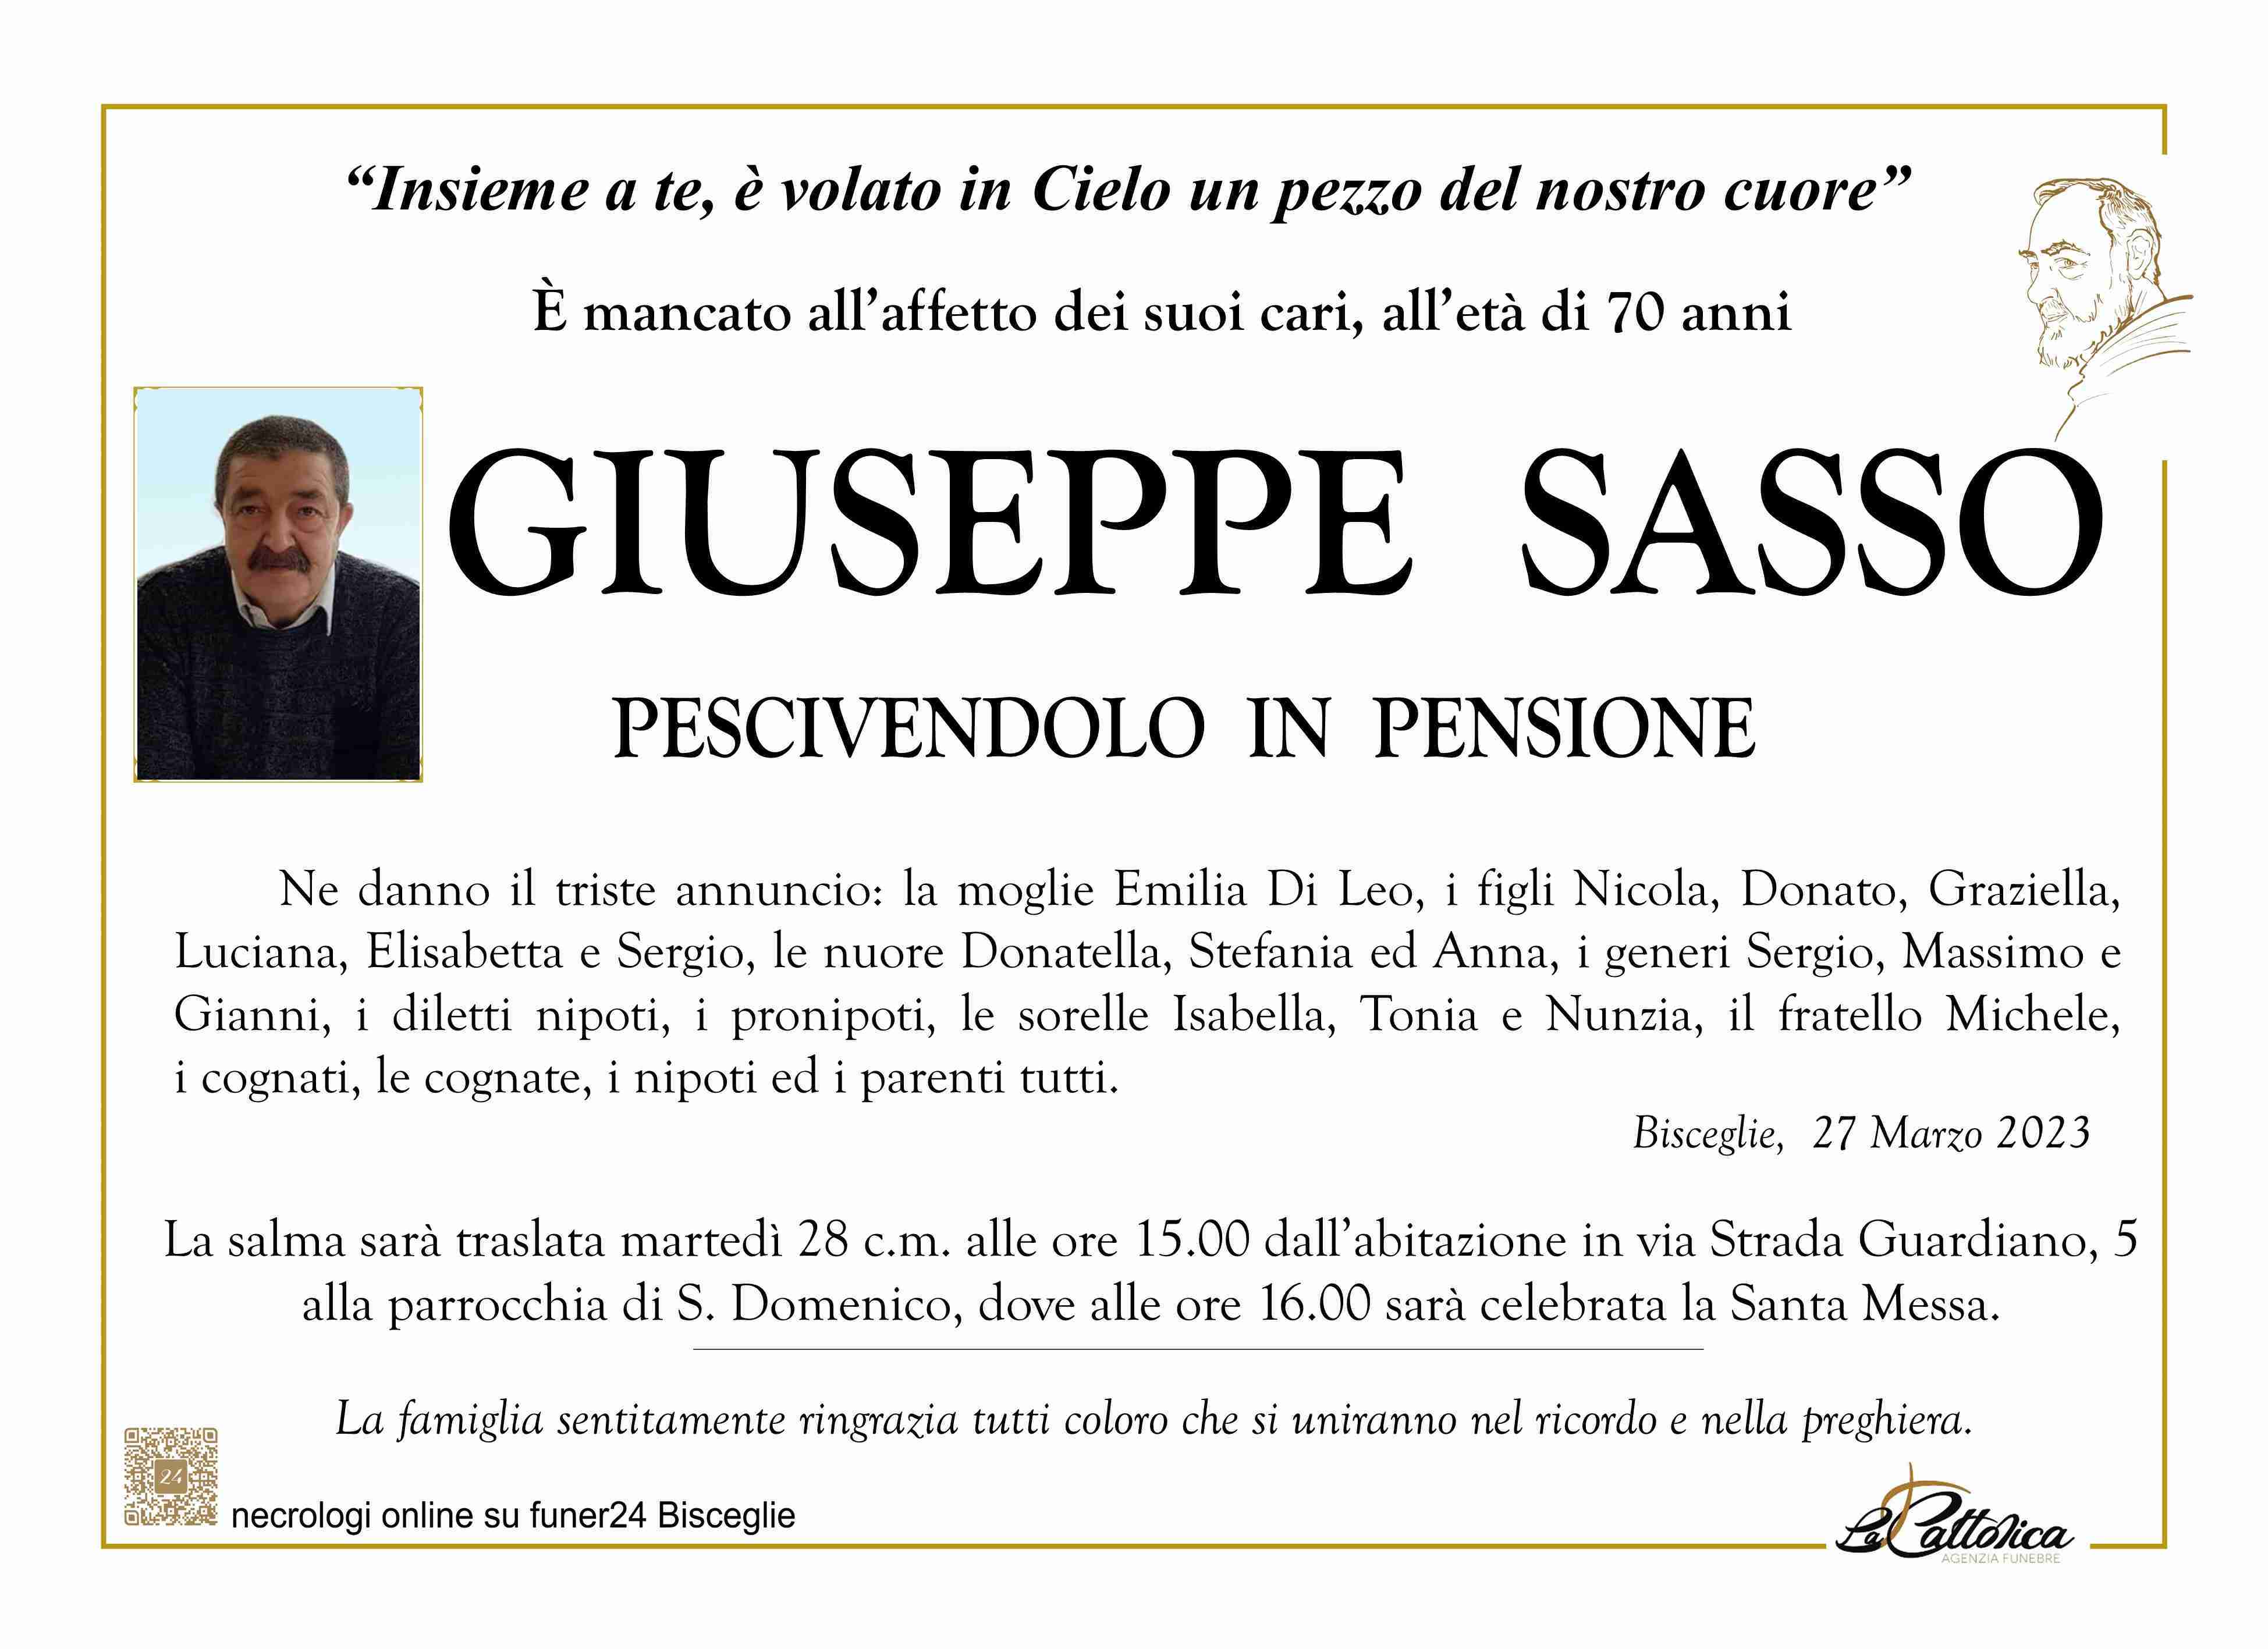 Giuseppe Sasso